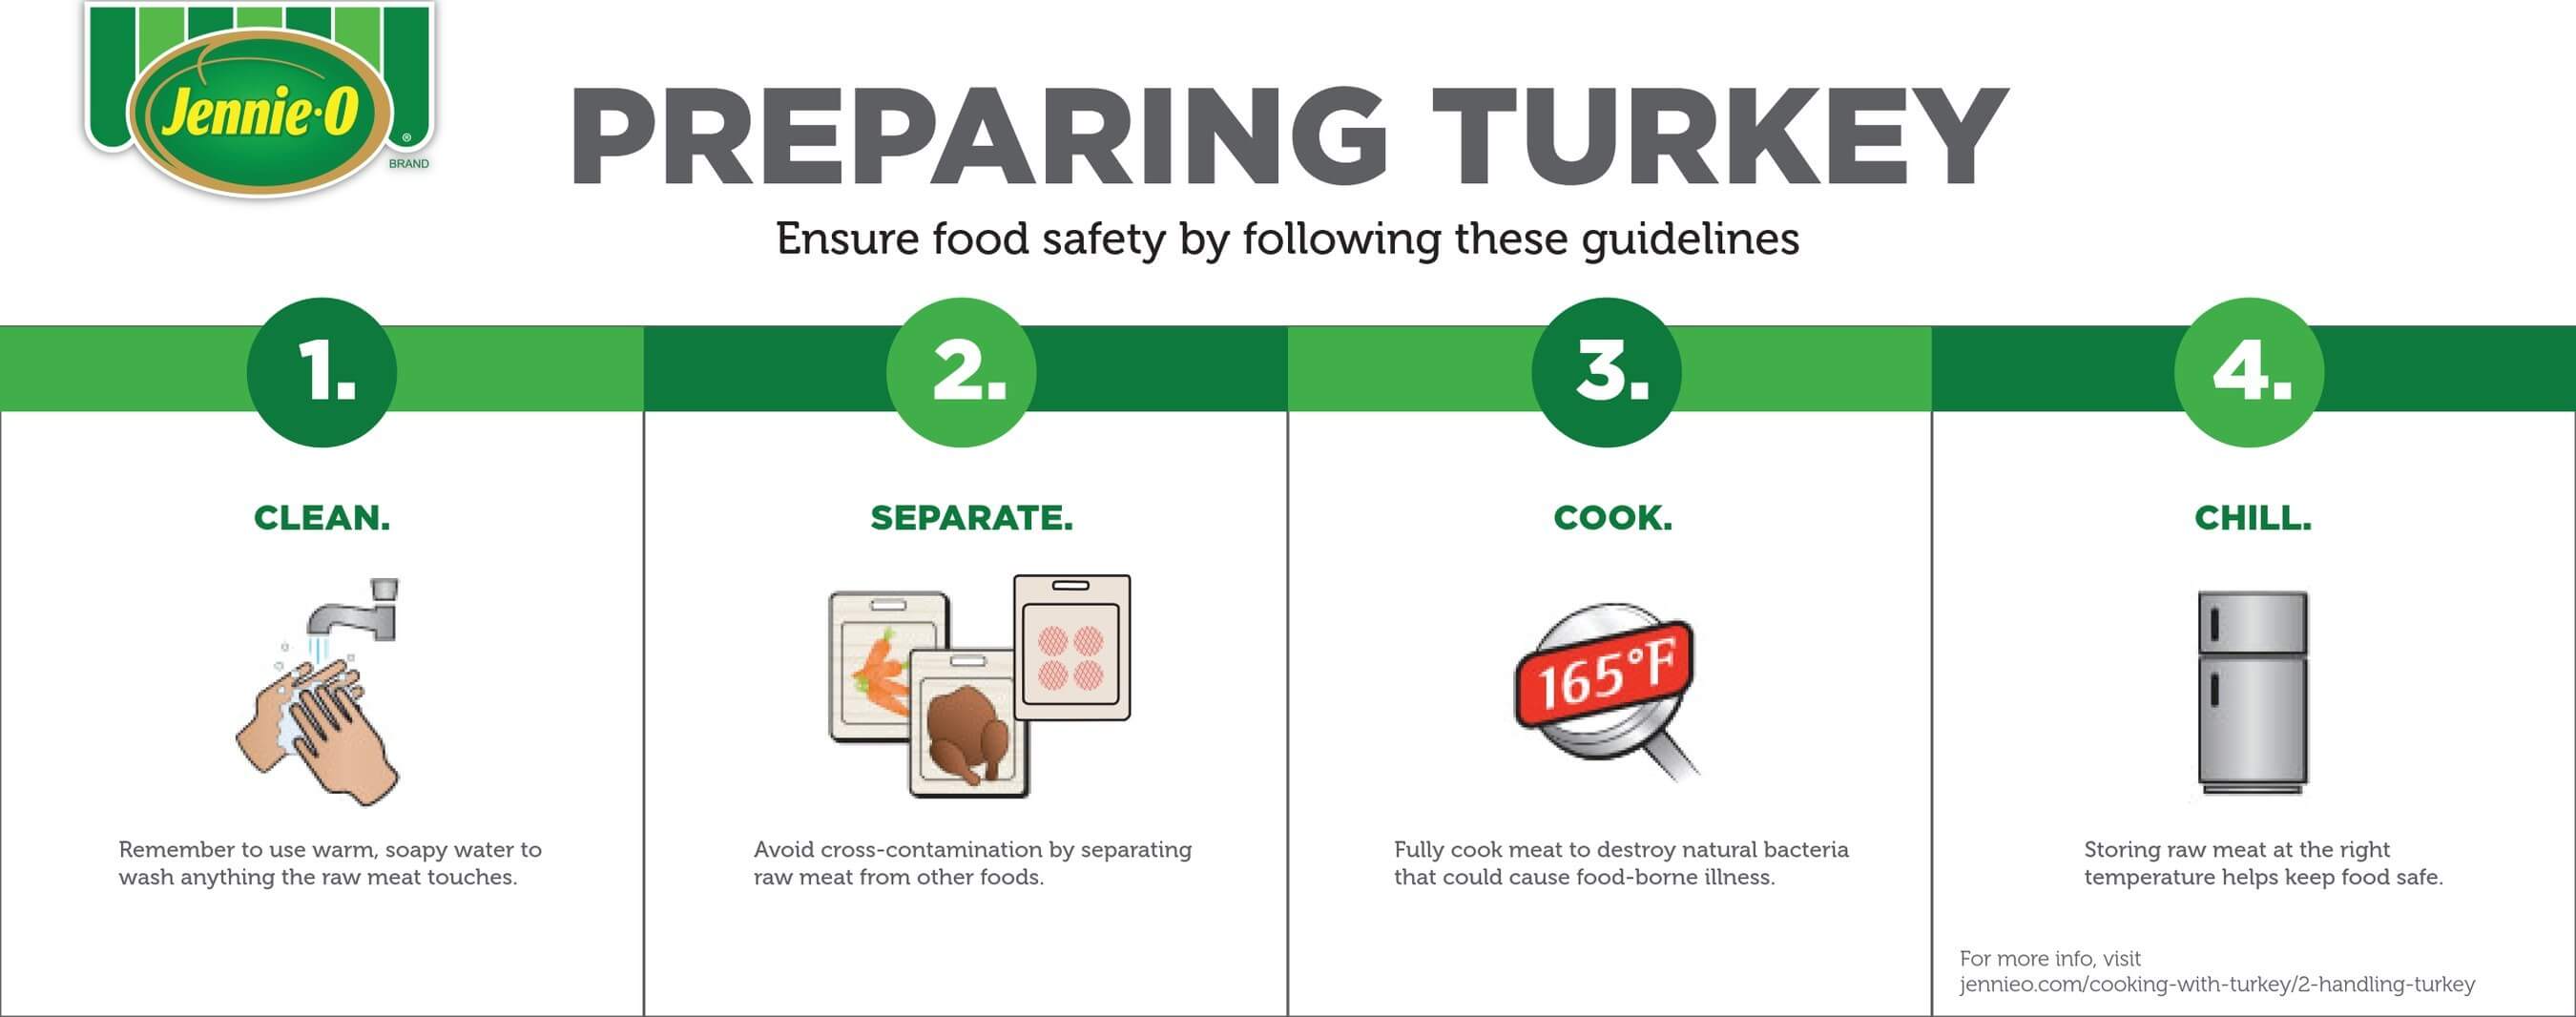 Preparing Turkey